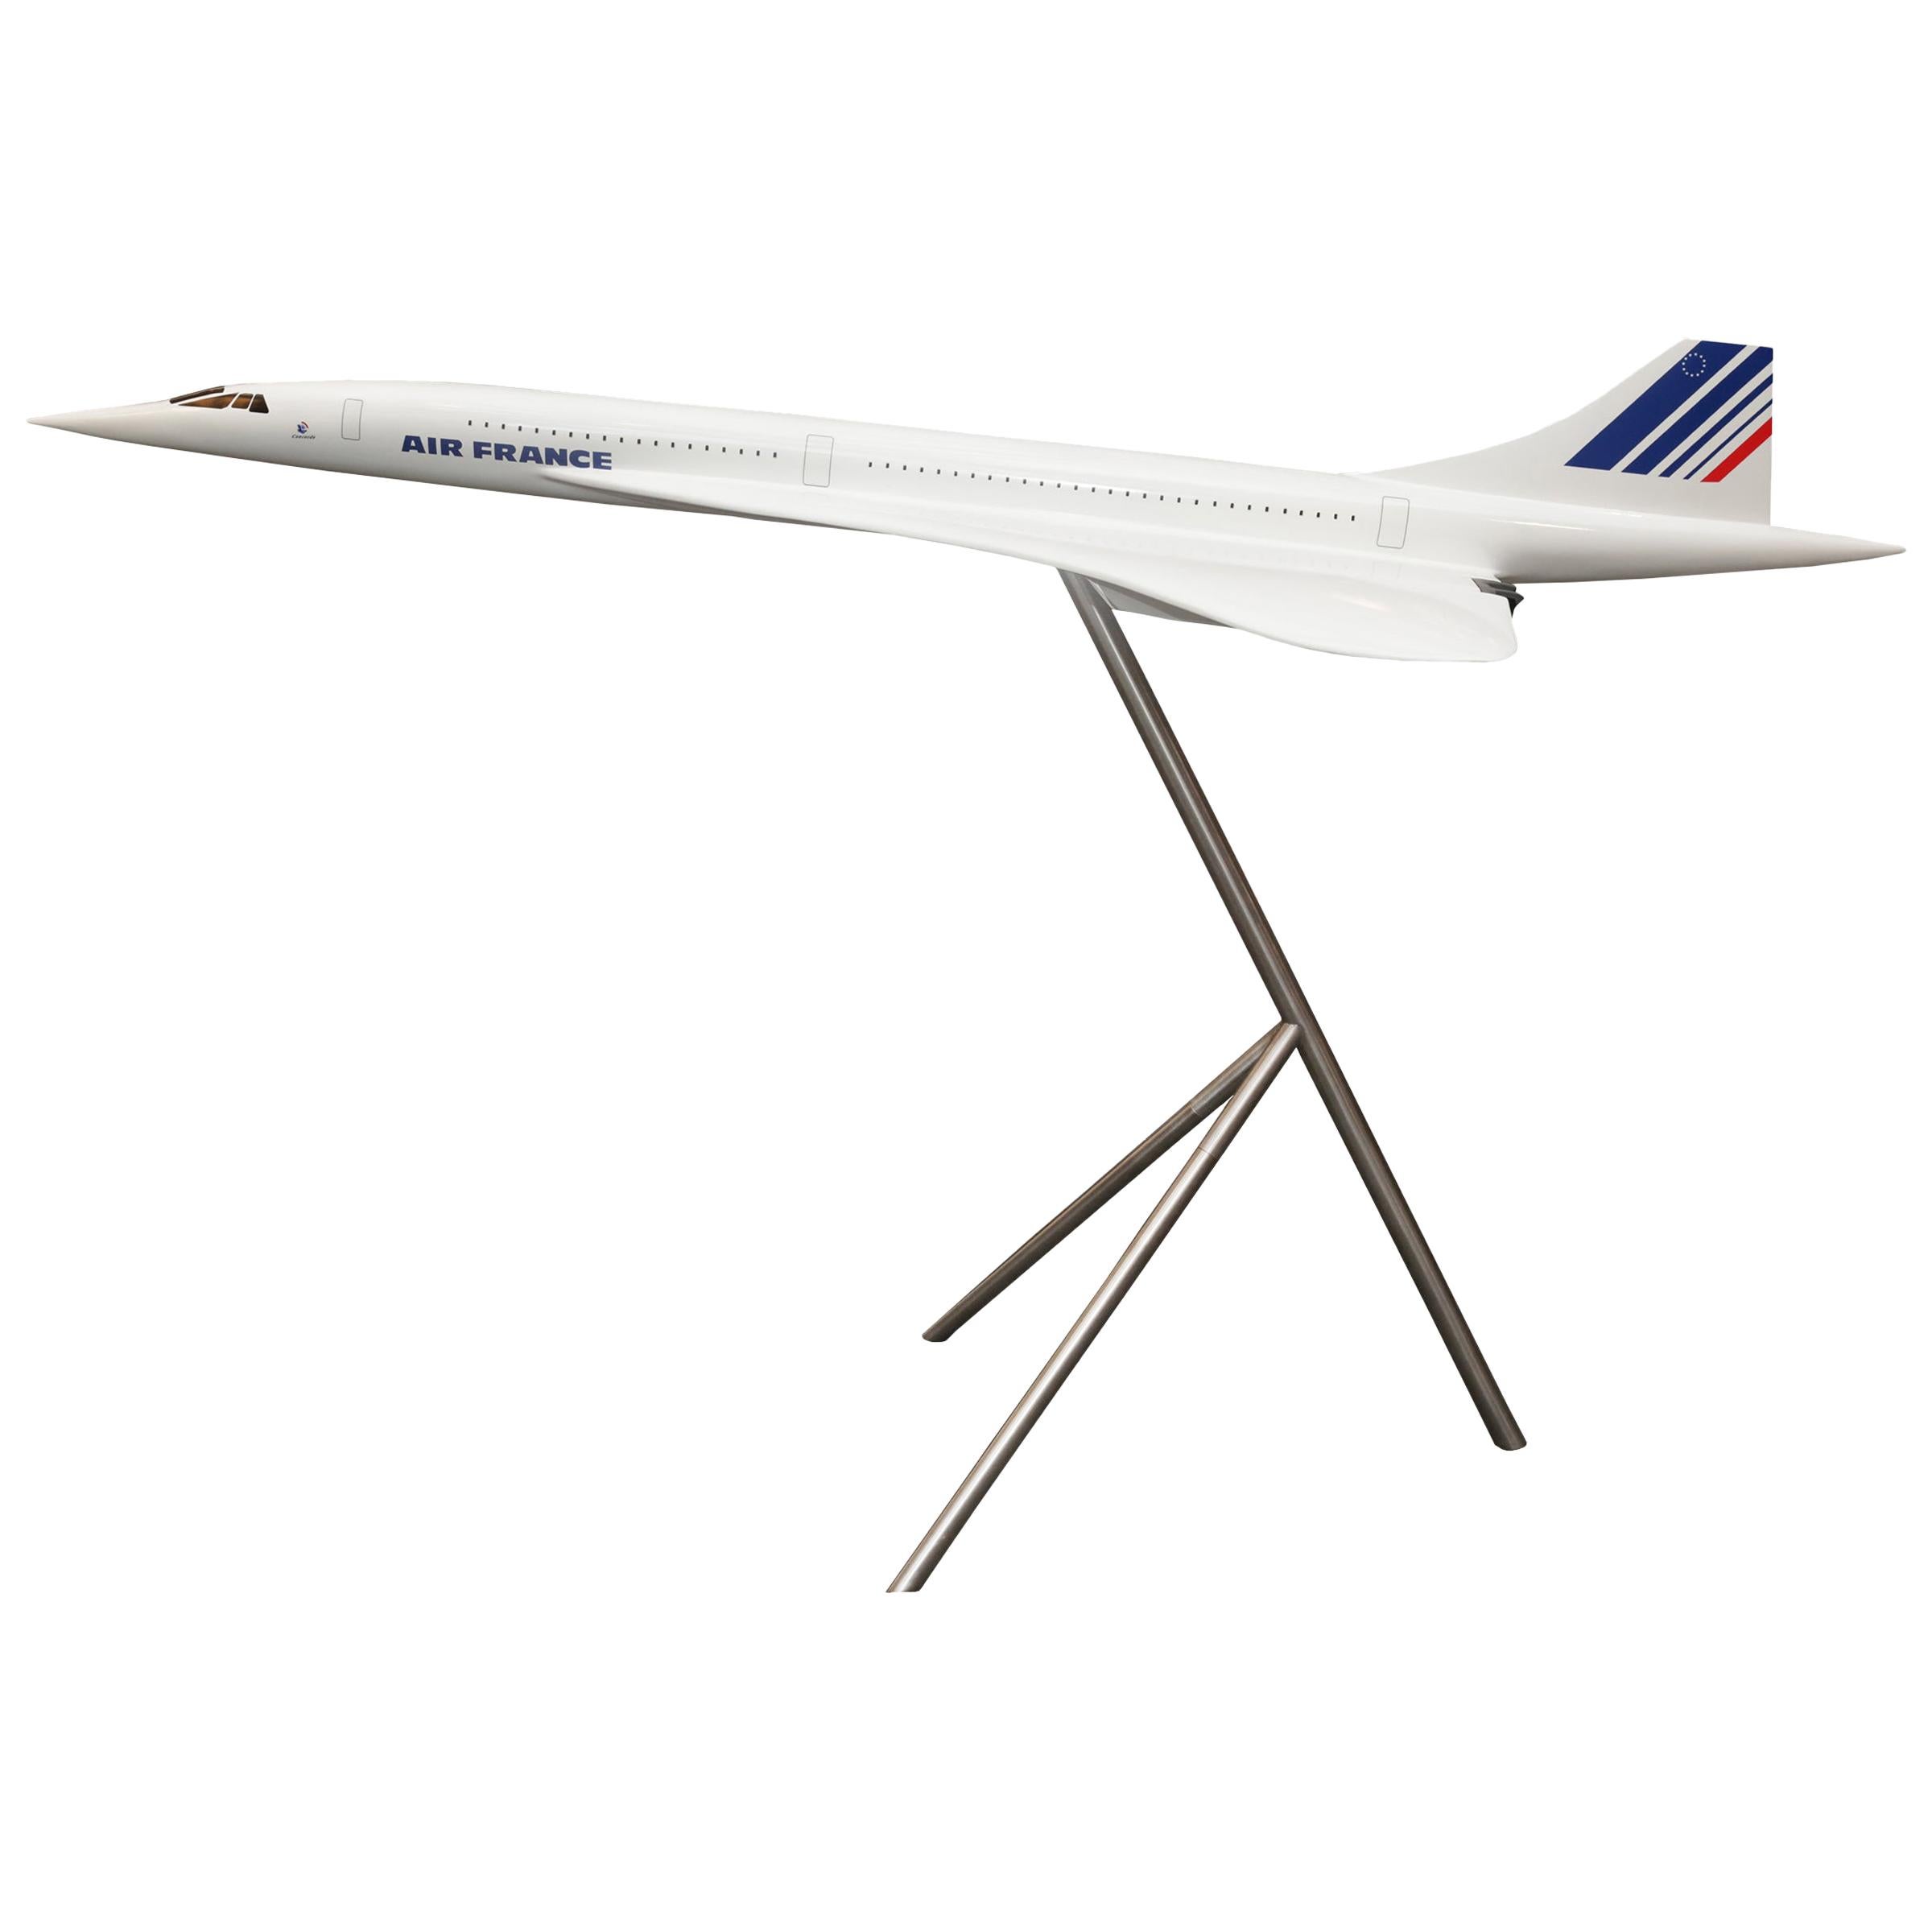 Sculpture Concorde Model Scale 1/36